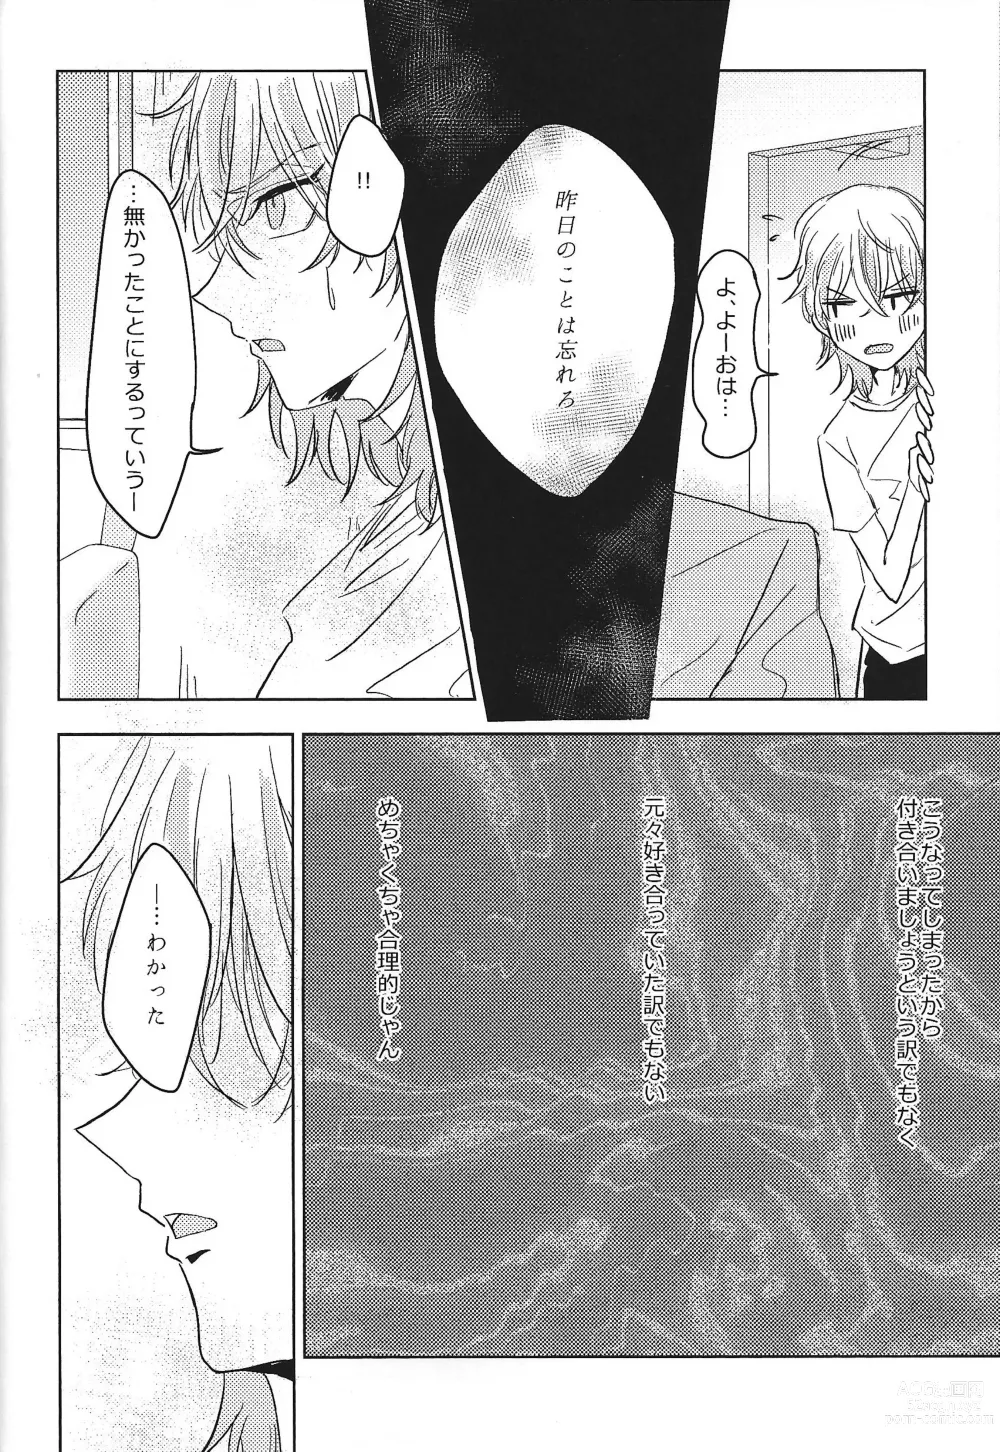 Page 21 of doujinshi Mikanseina